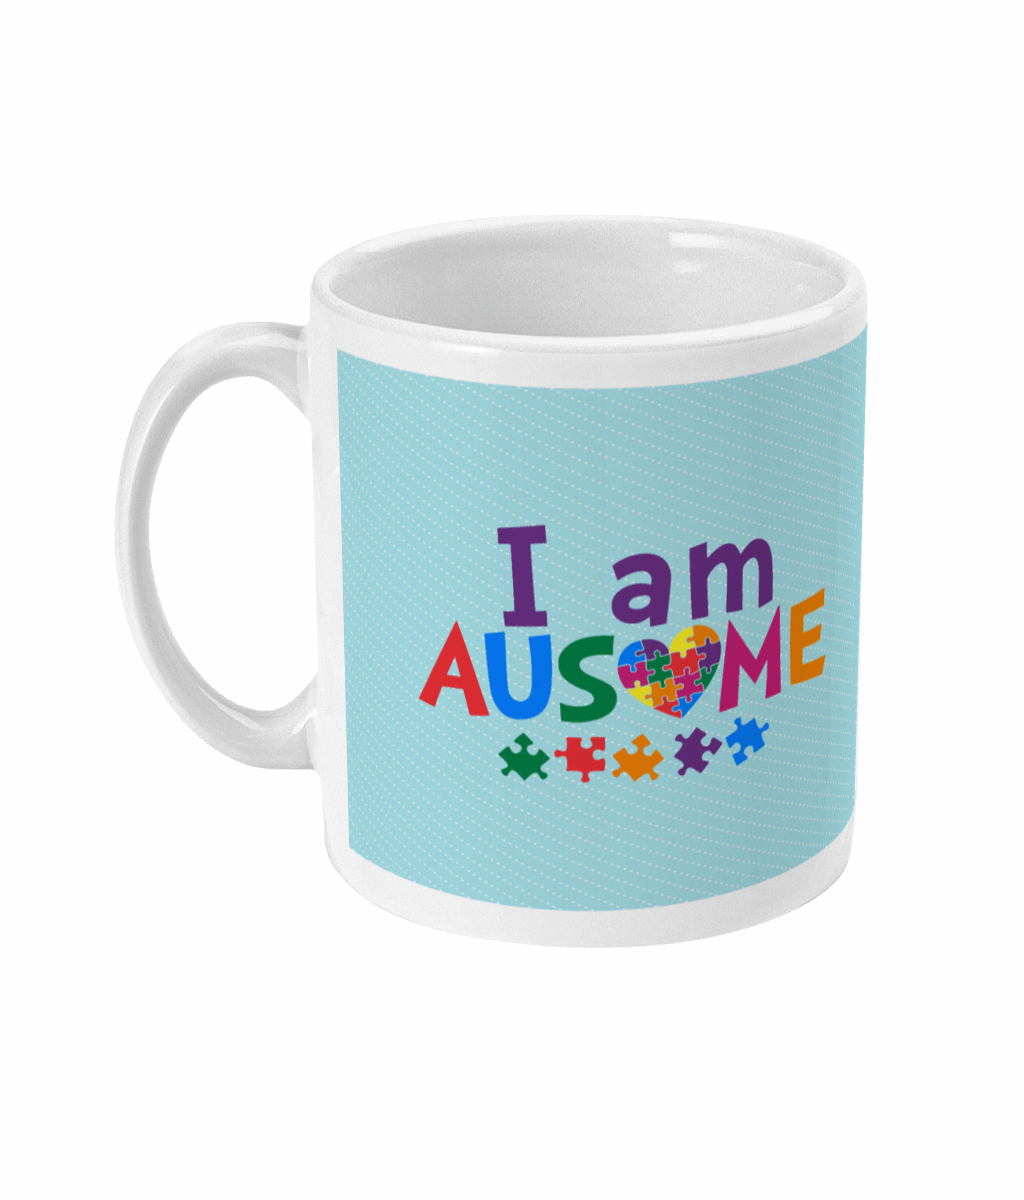  I am Ausome Autism Mug by Free Spirit Accessories sold by Free Spirit Accessories